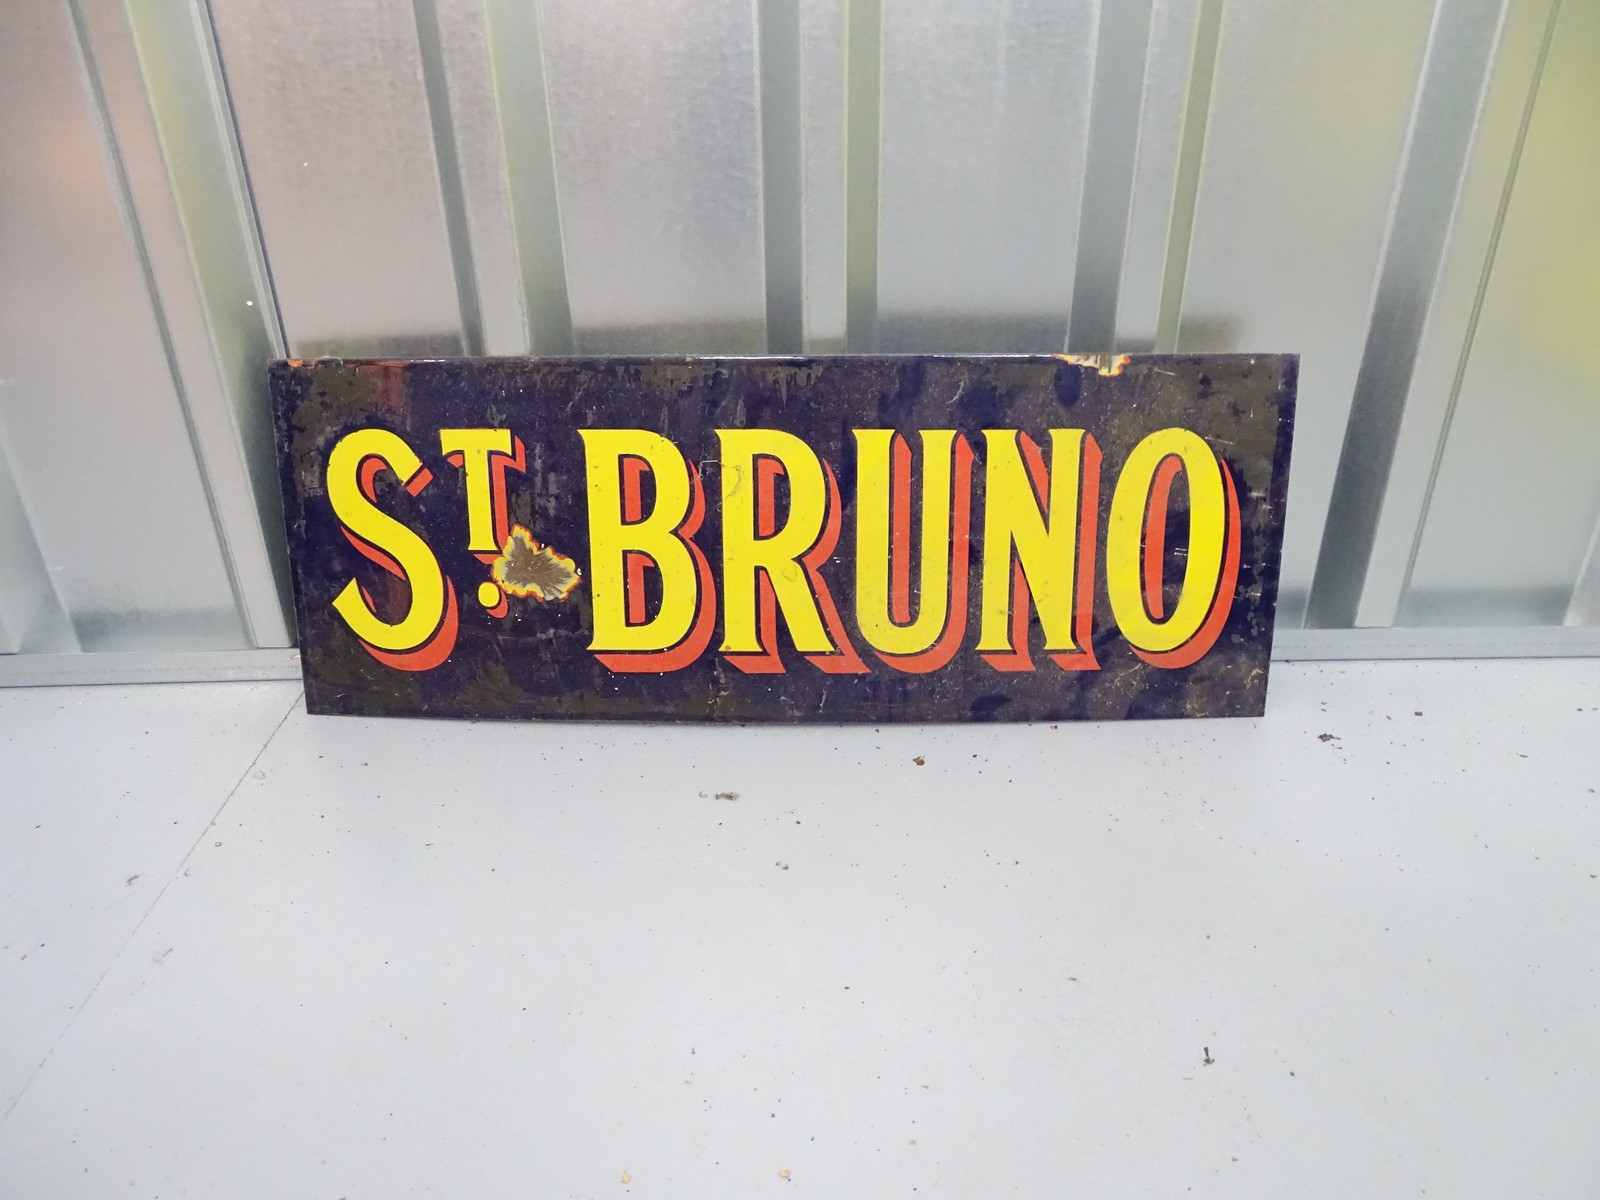 ST BRUNO (26" x 9.5") - enamel single sided advertising sign